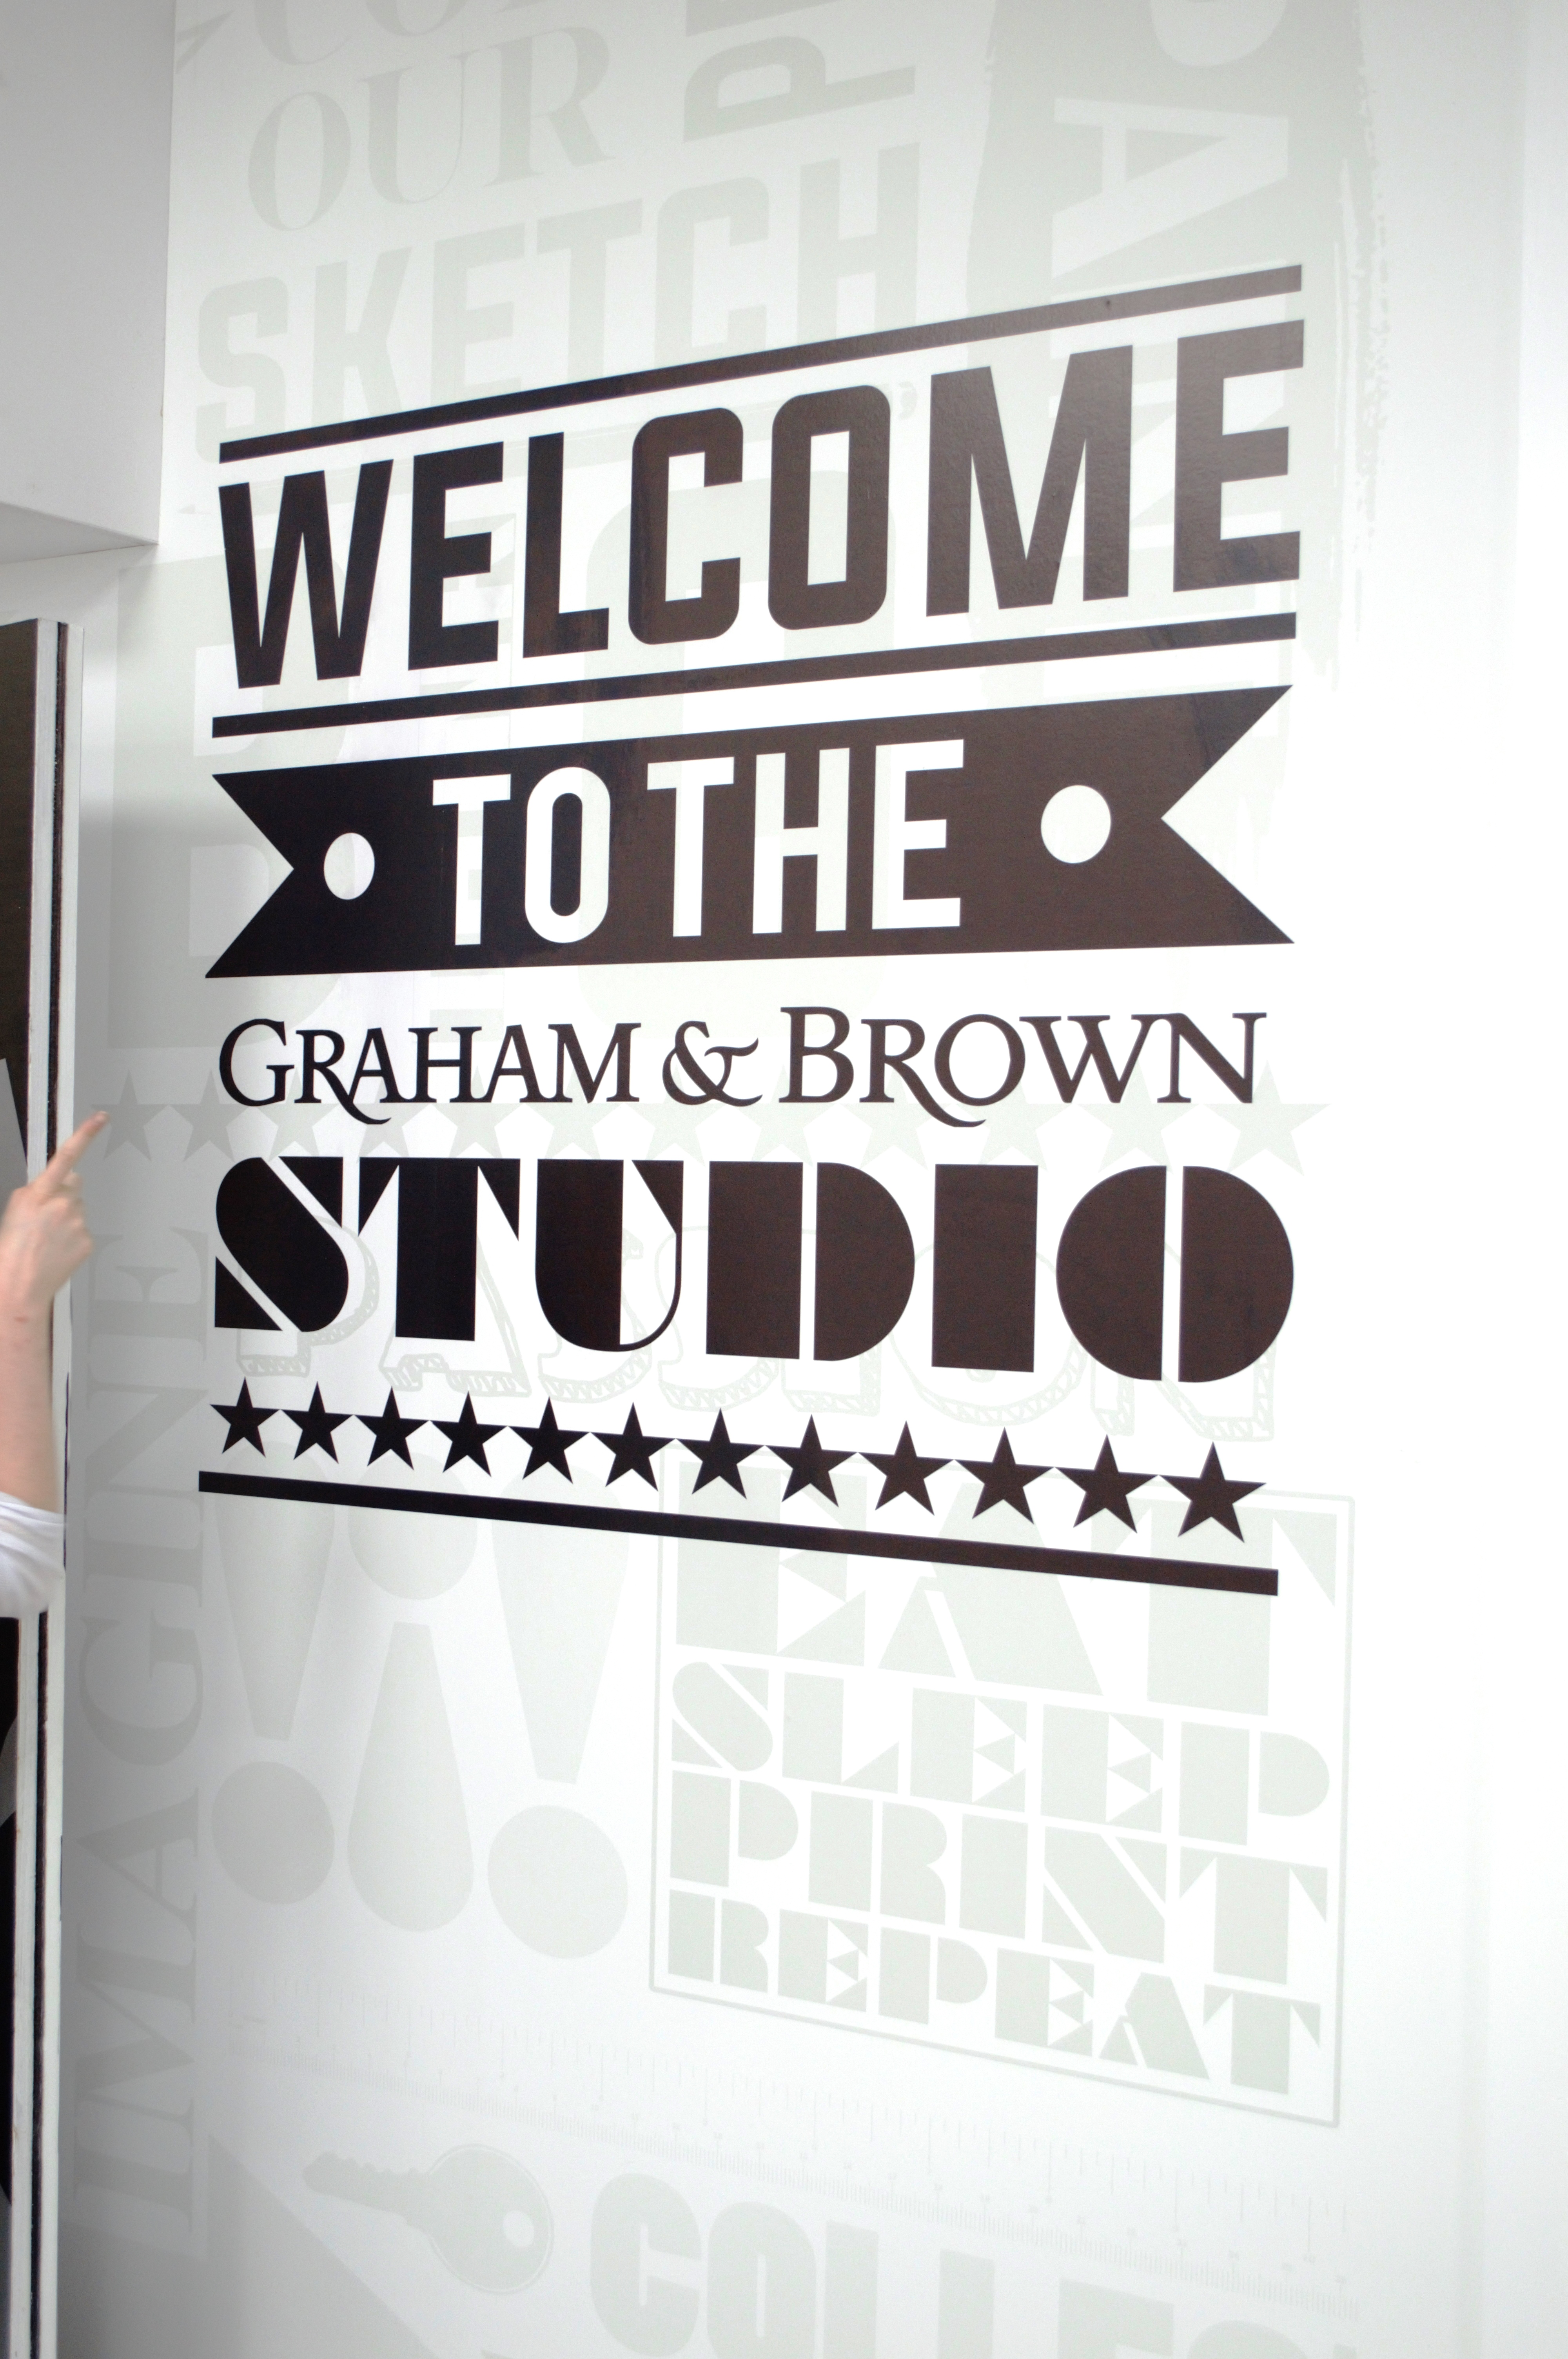 Graham & Brown Office Design